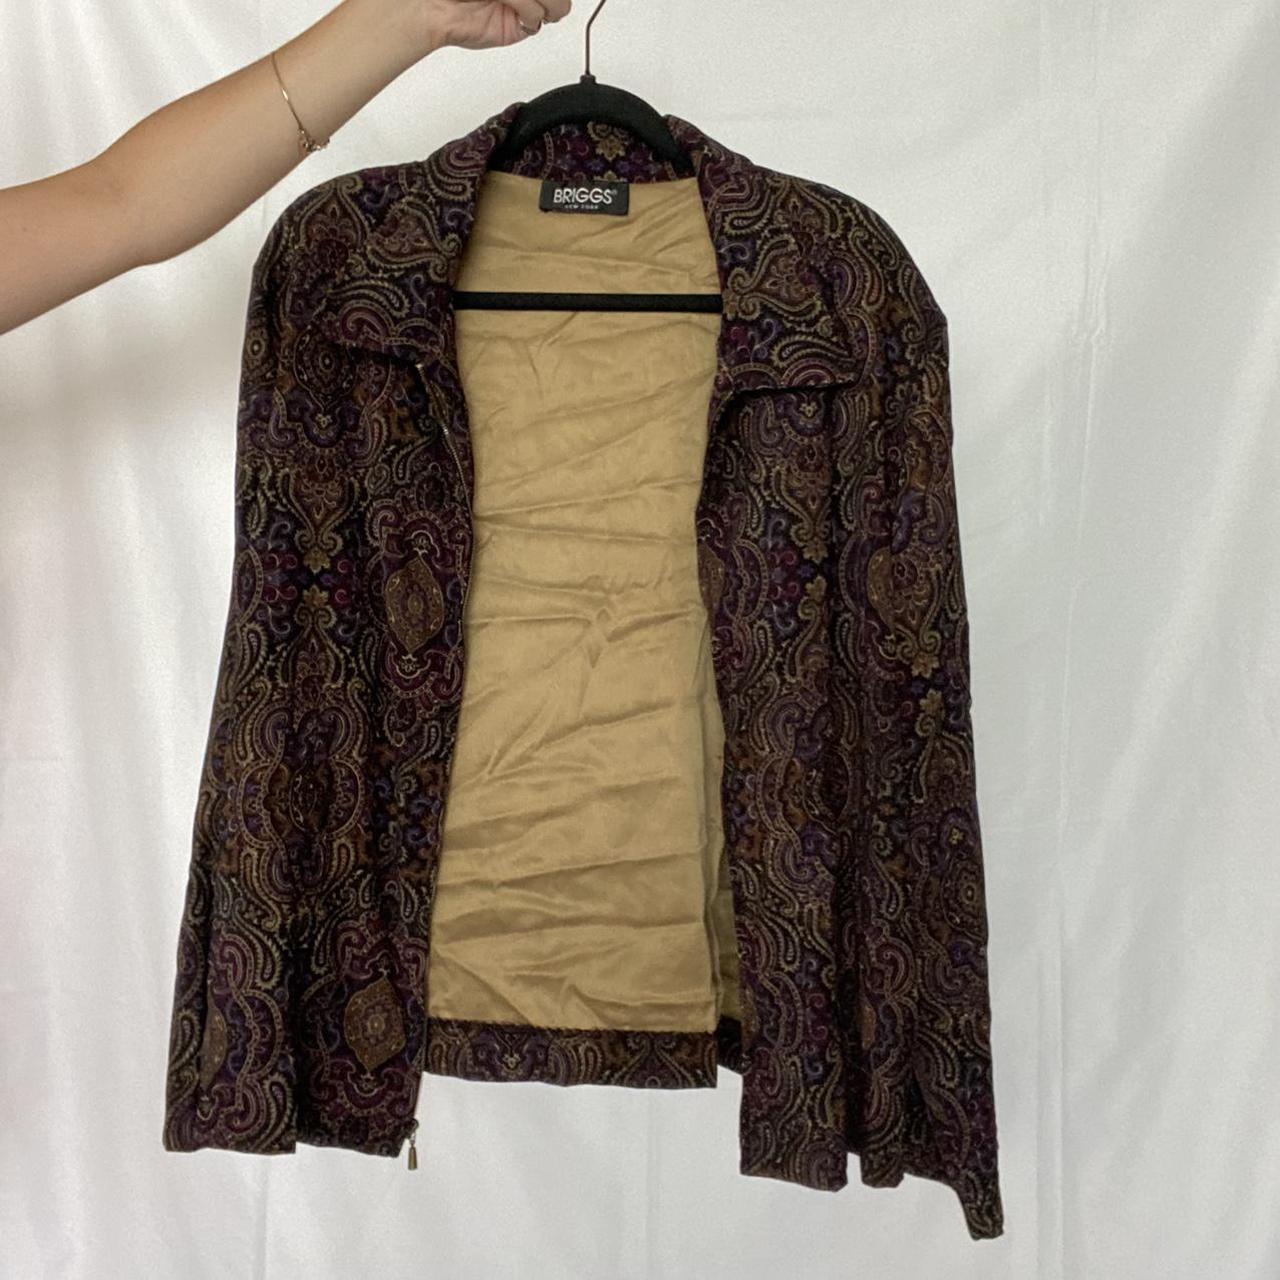 💰 Vintage paisley jacket by Briggs. Has shoulder... - Depop